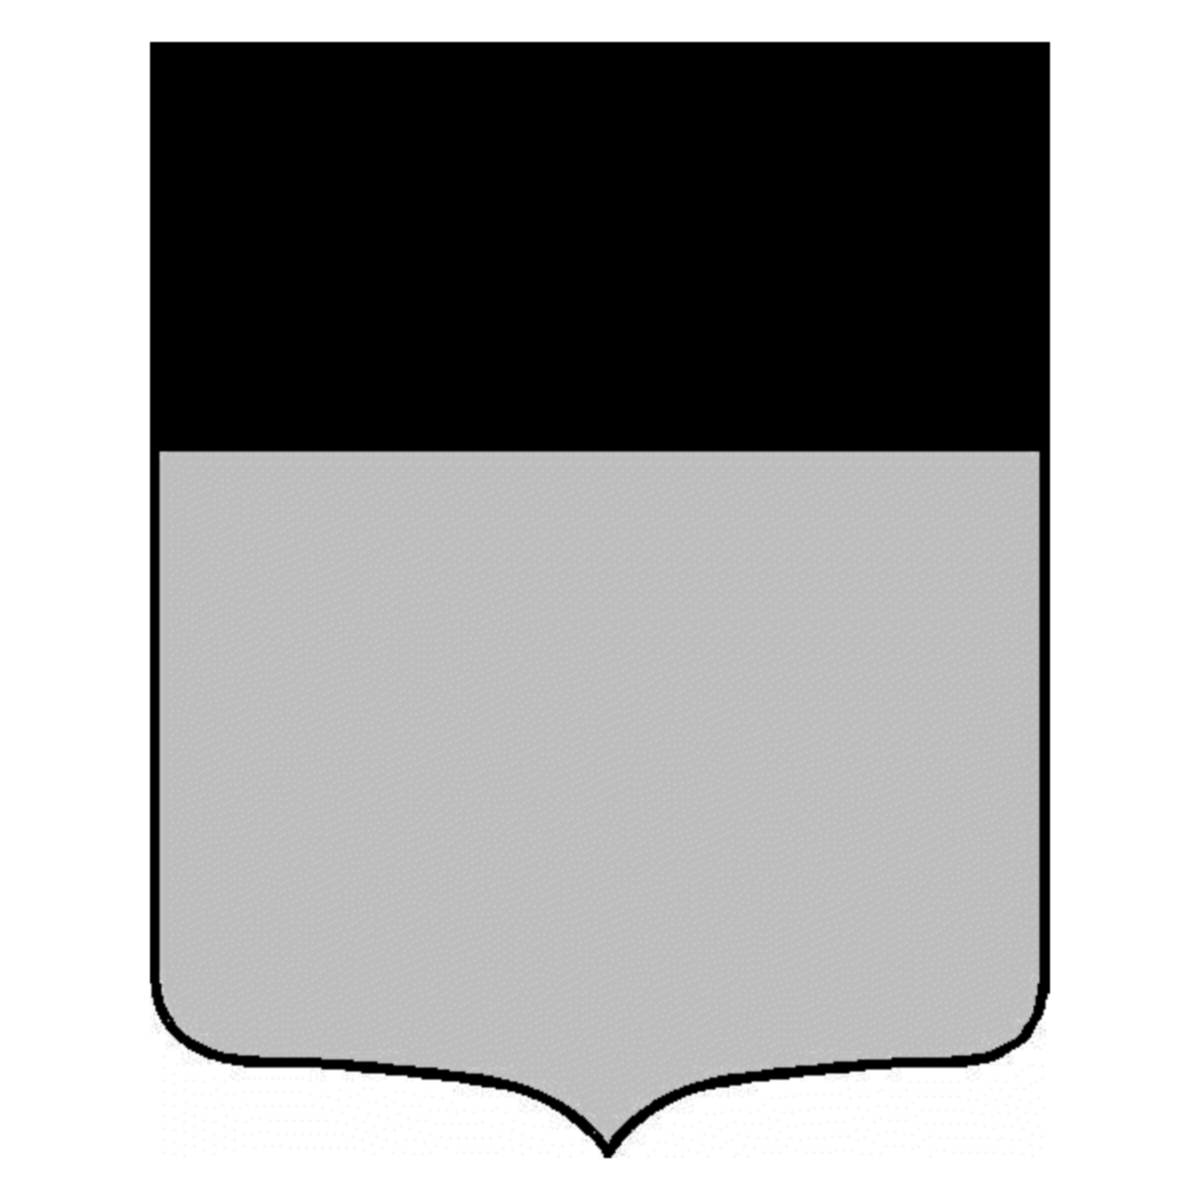 Coat of arms of family Molen